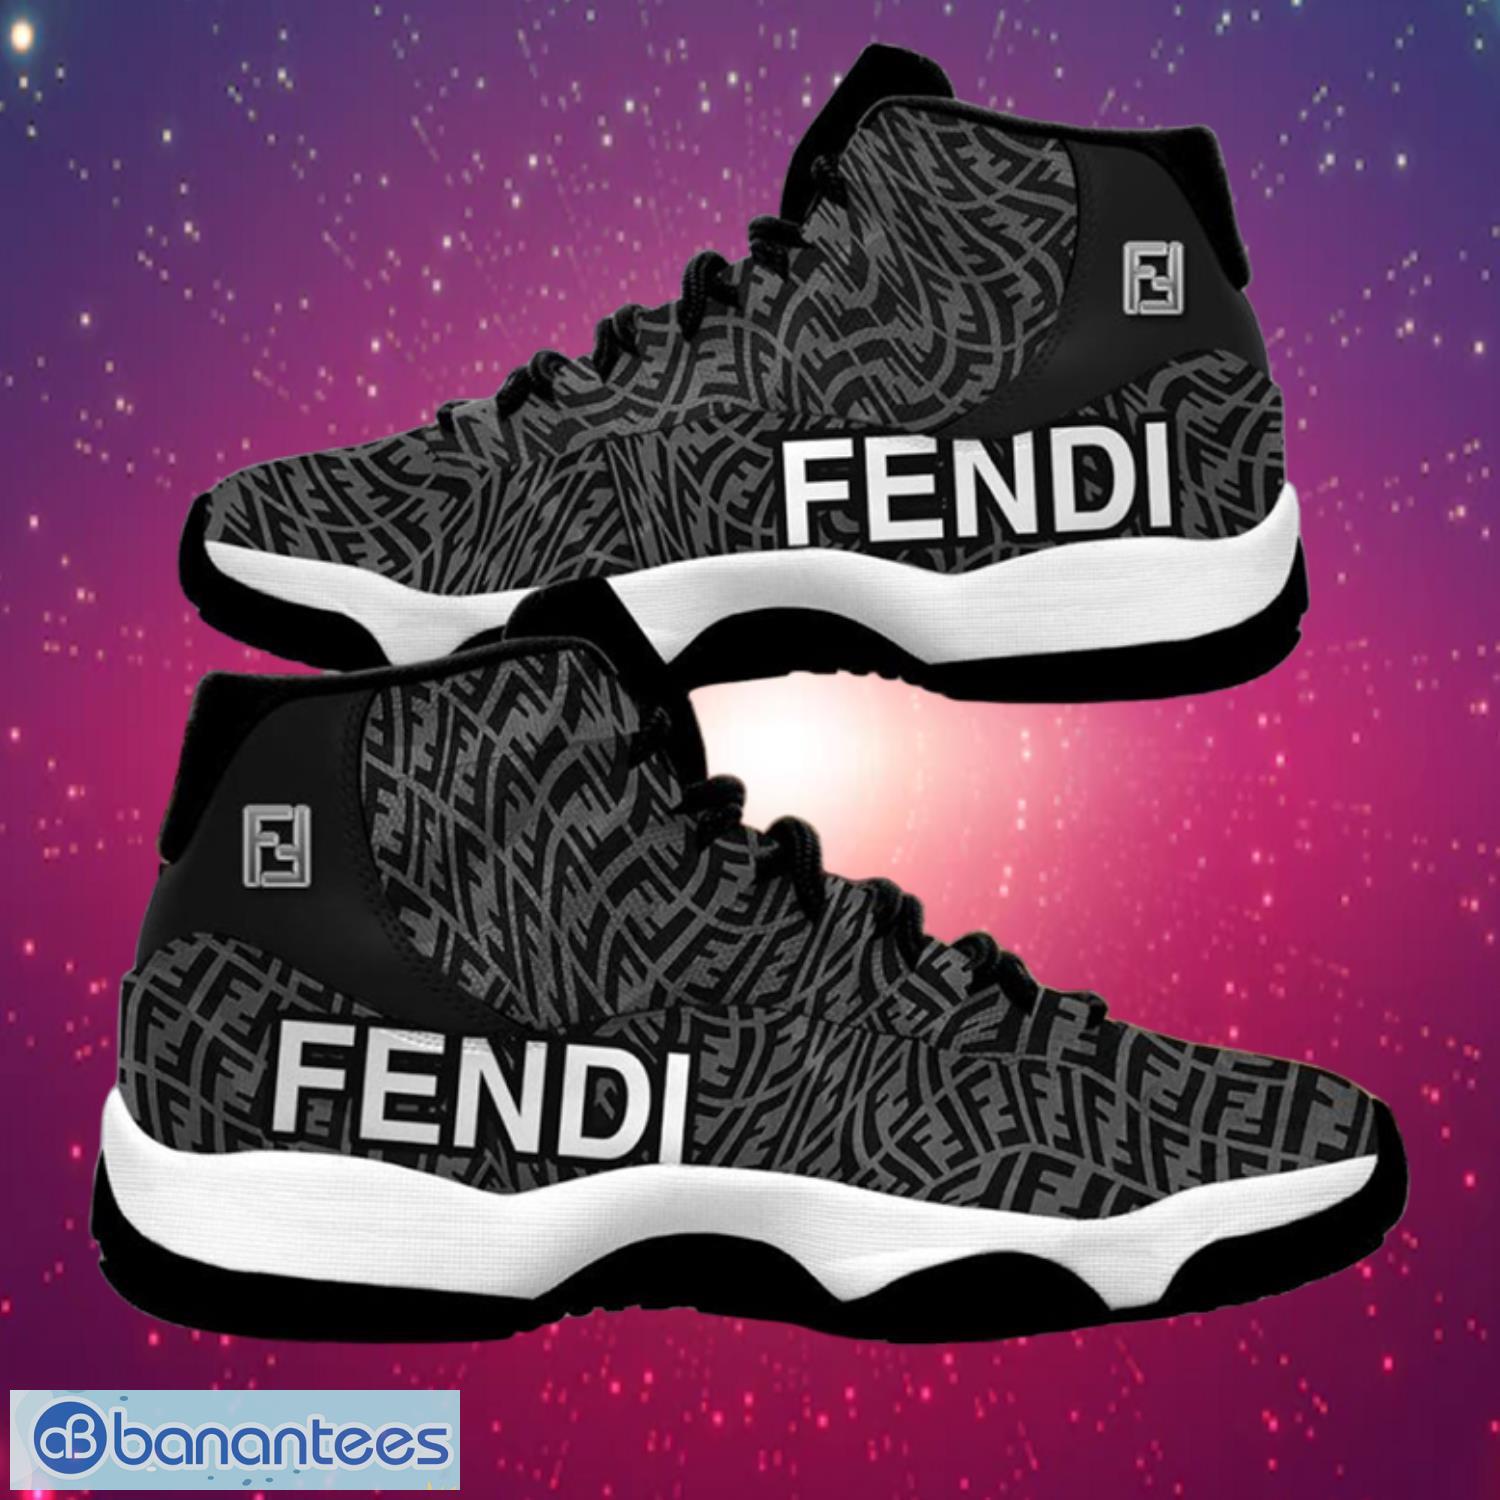 Fendi Dark Style Air Jordan 11 Shoes Product Photo 1